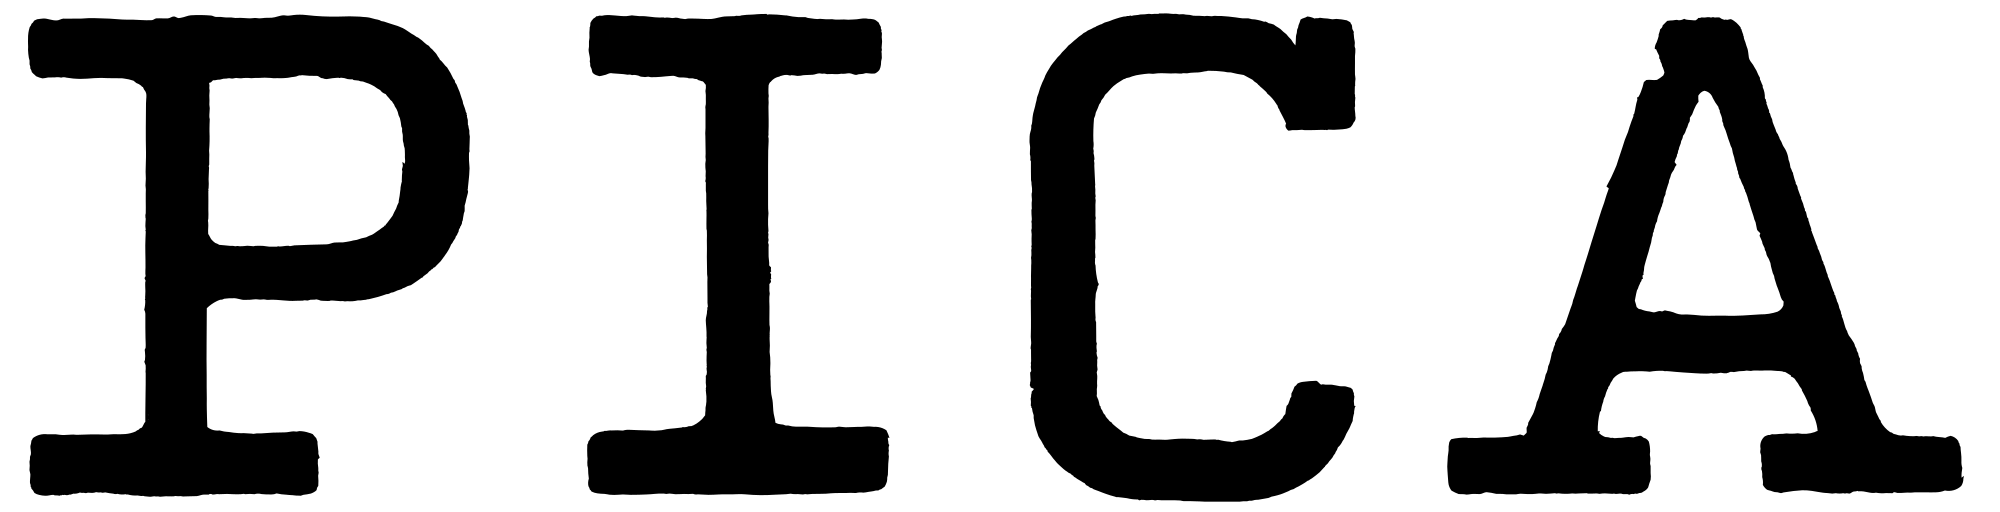 PICA_Logo.svg.png